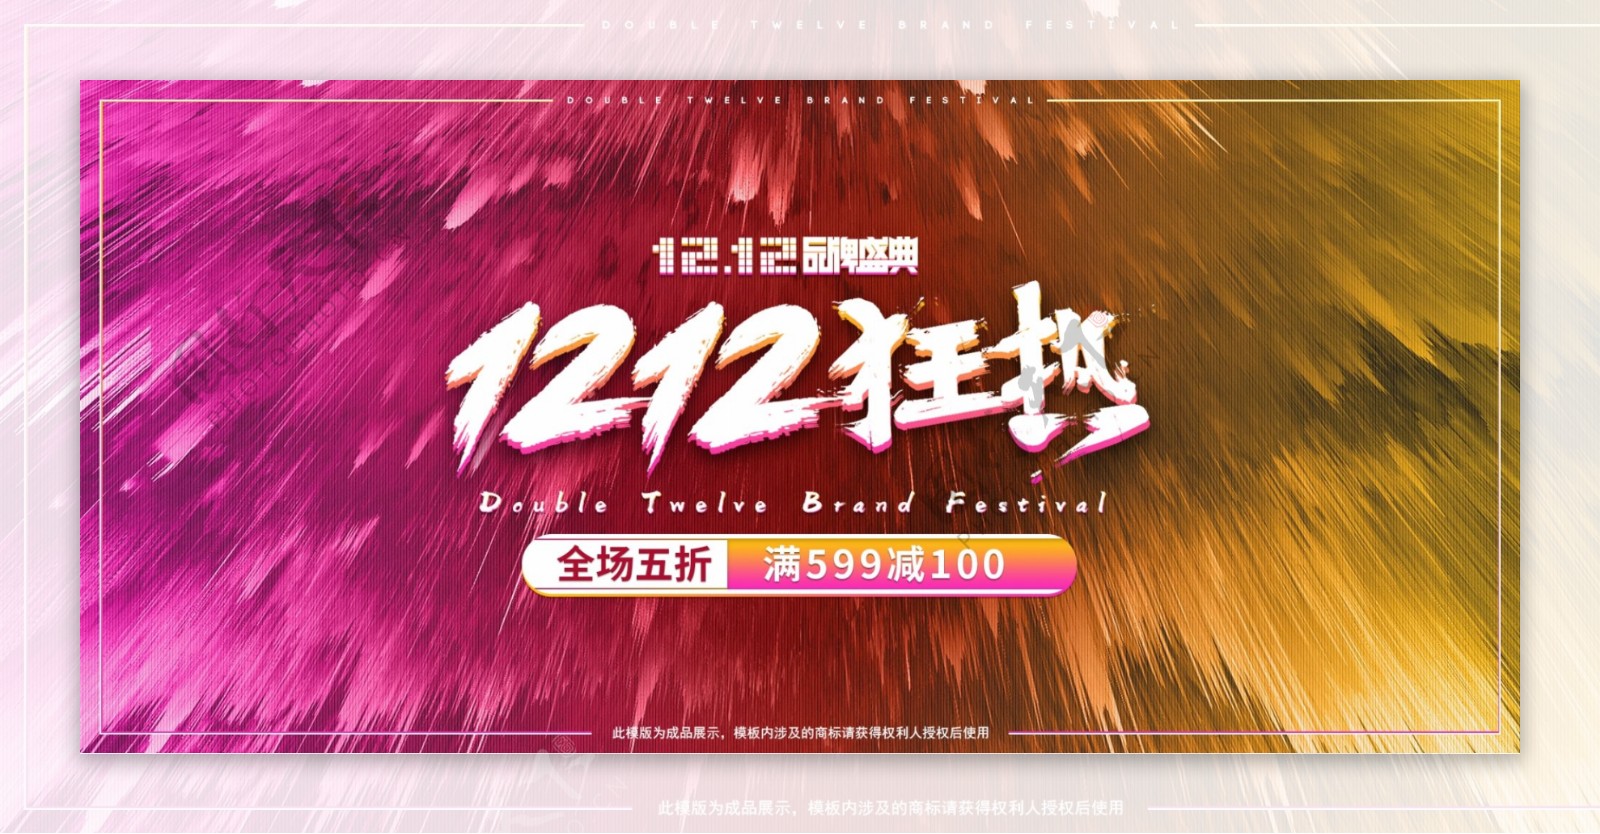 天猫淘宝1212水彩风促销banner